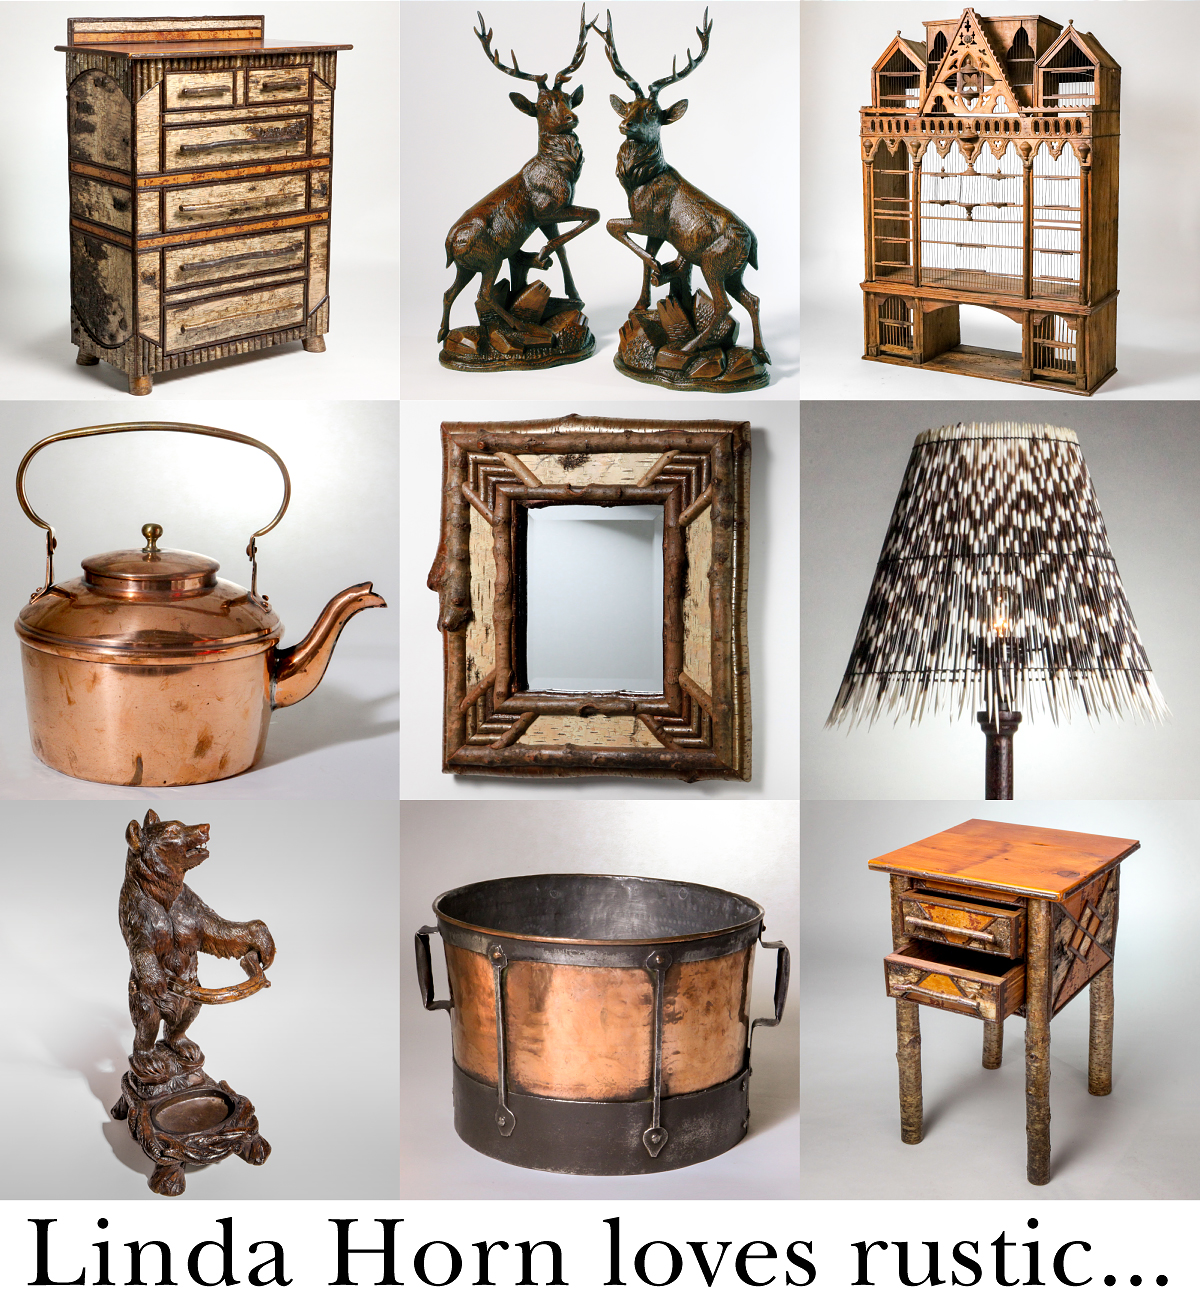 Linda Horn loves rustic...